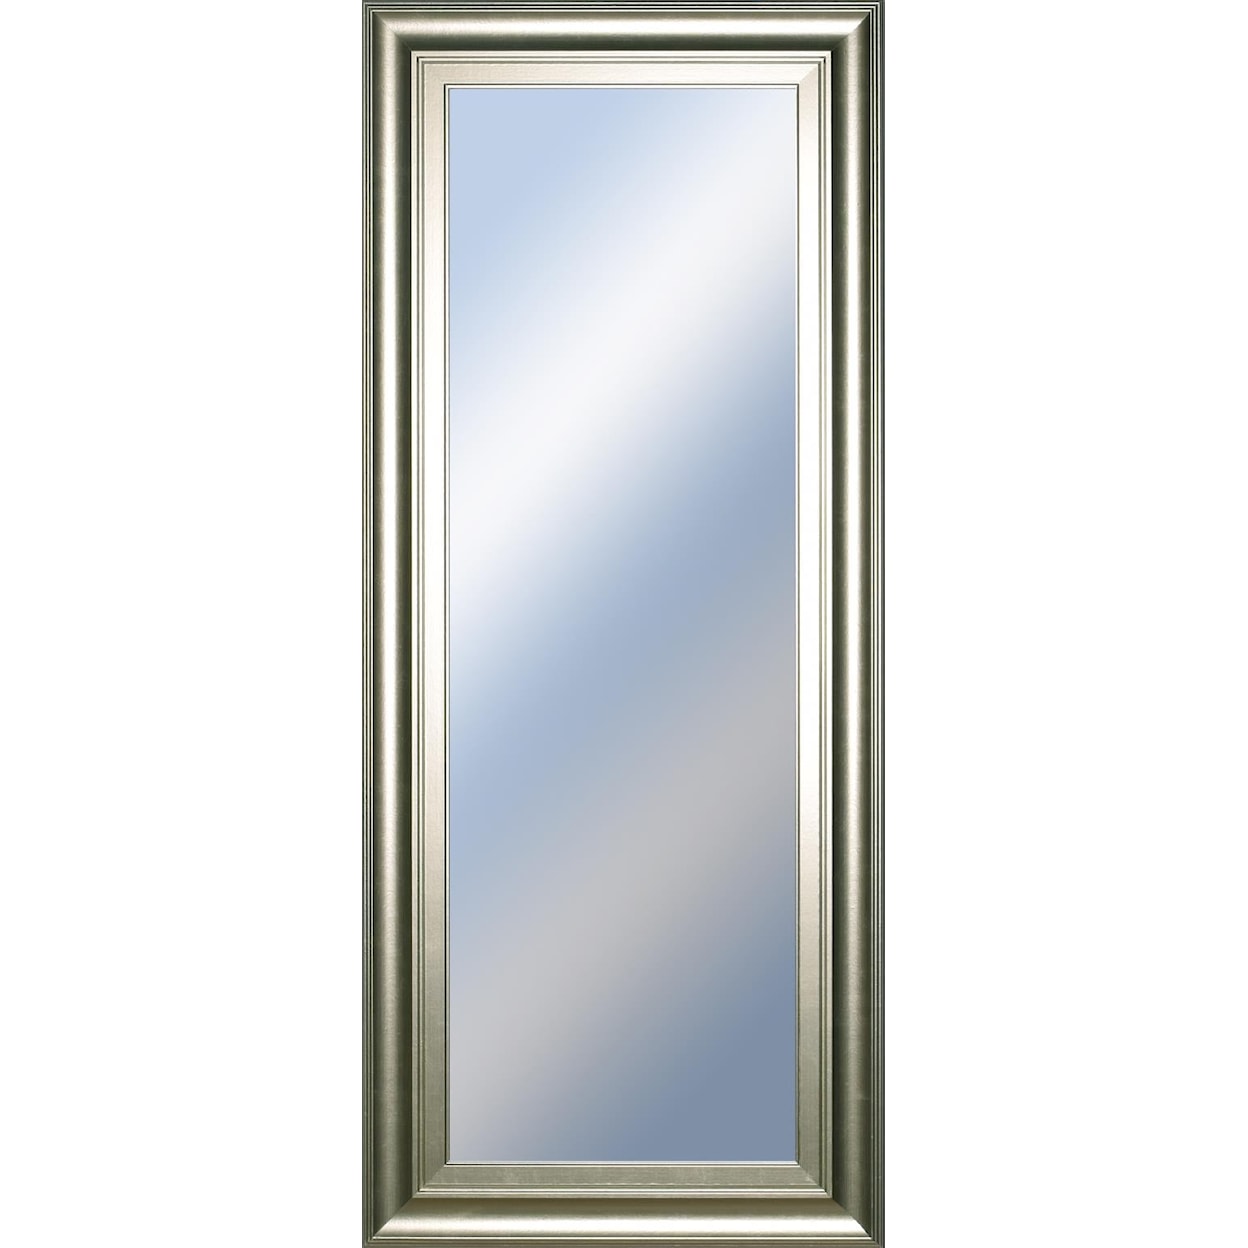 Classy Art Classy Art Framed Mirror 18x42